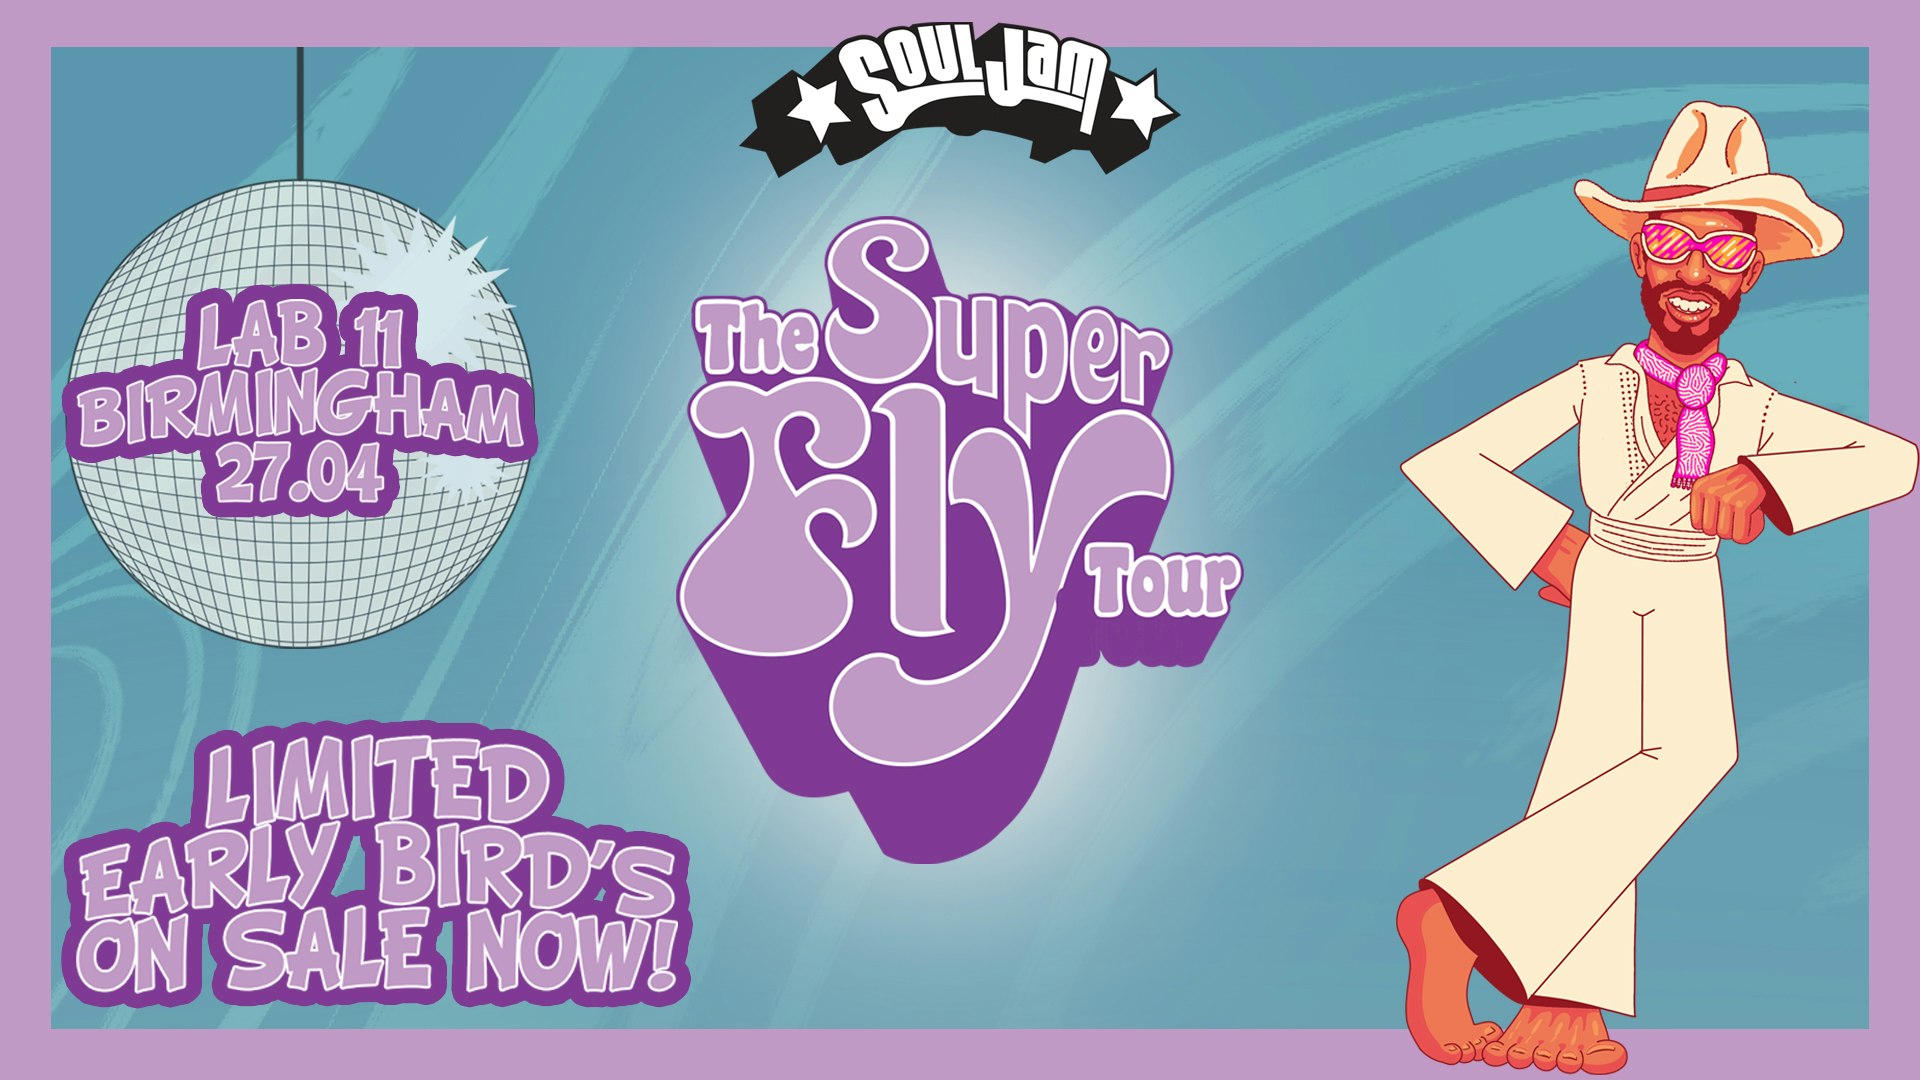 SoulJam | Birmingham | The Super Fly Tour!